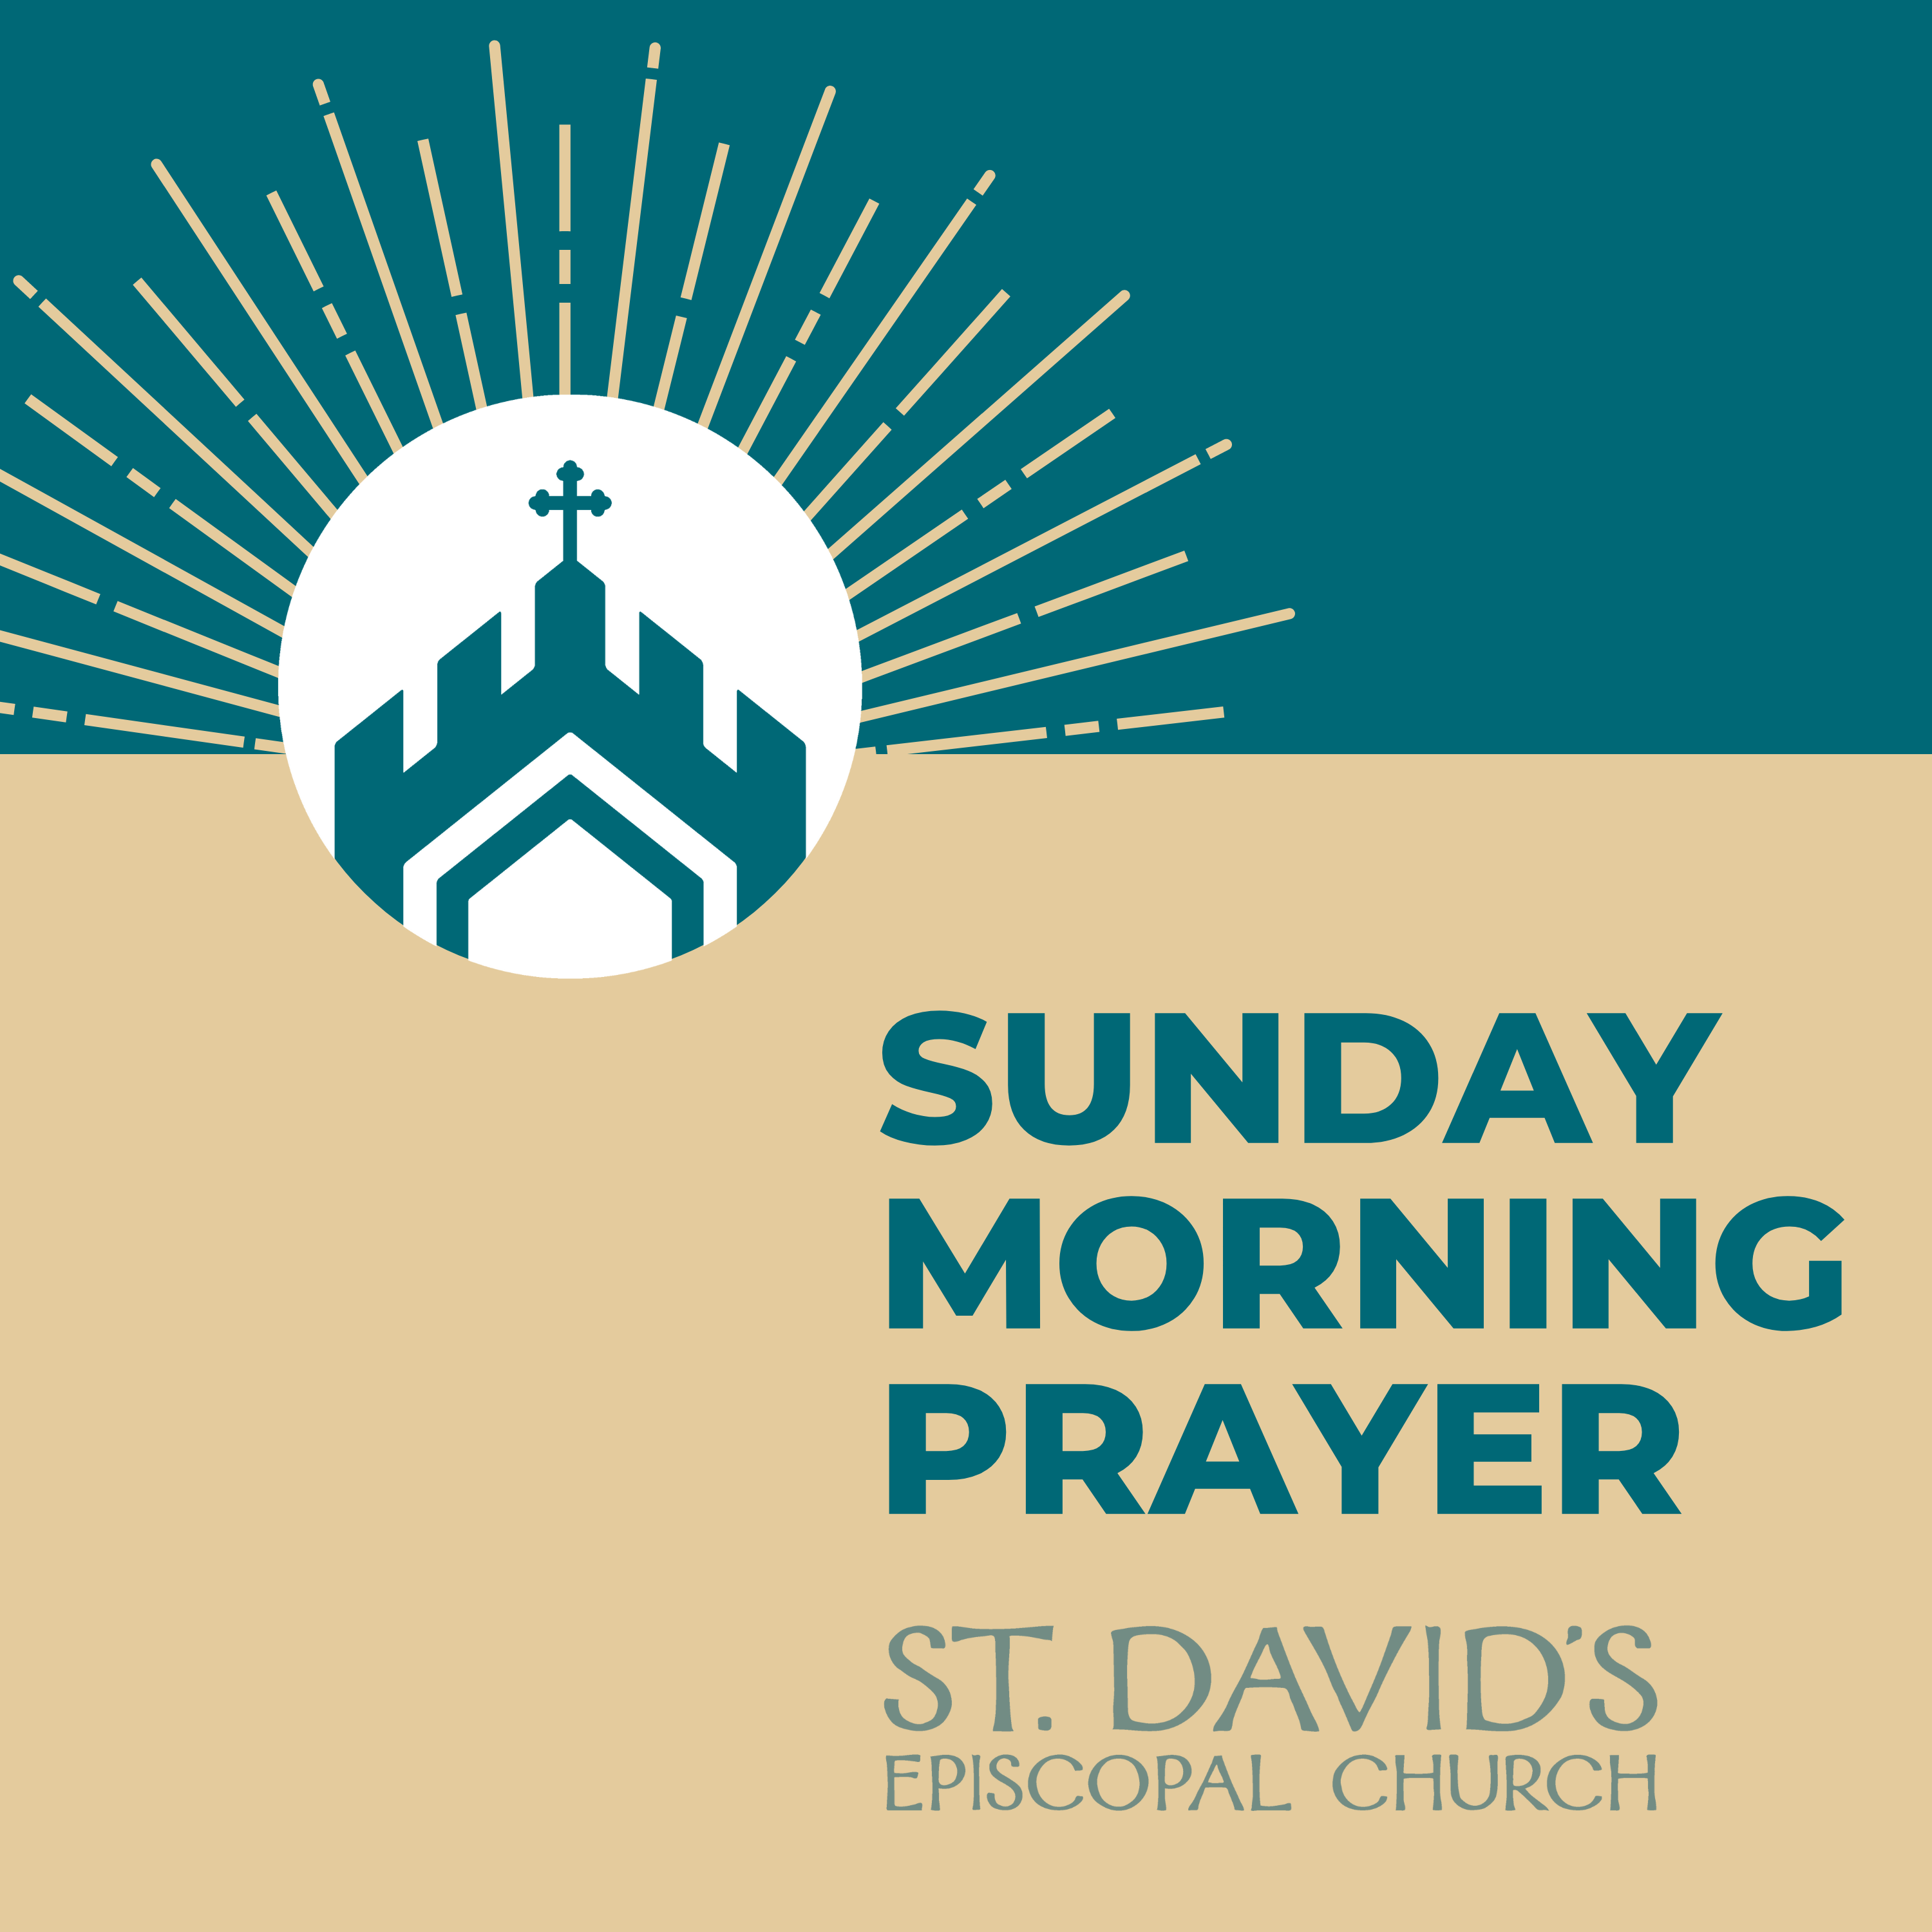 Sunday Morning Prayer: Rite Two, Year 2, 19th Sunday after Pentecost